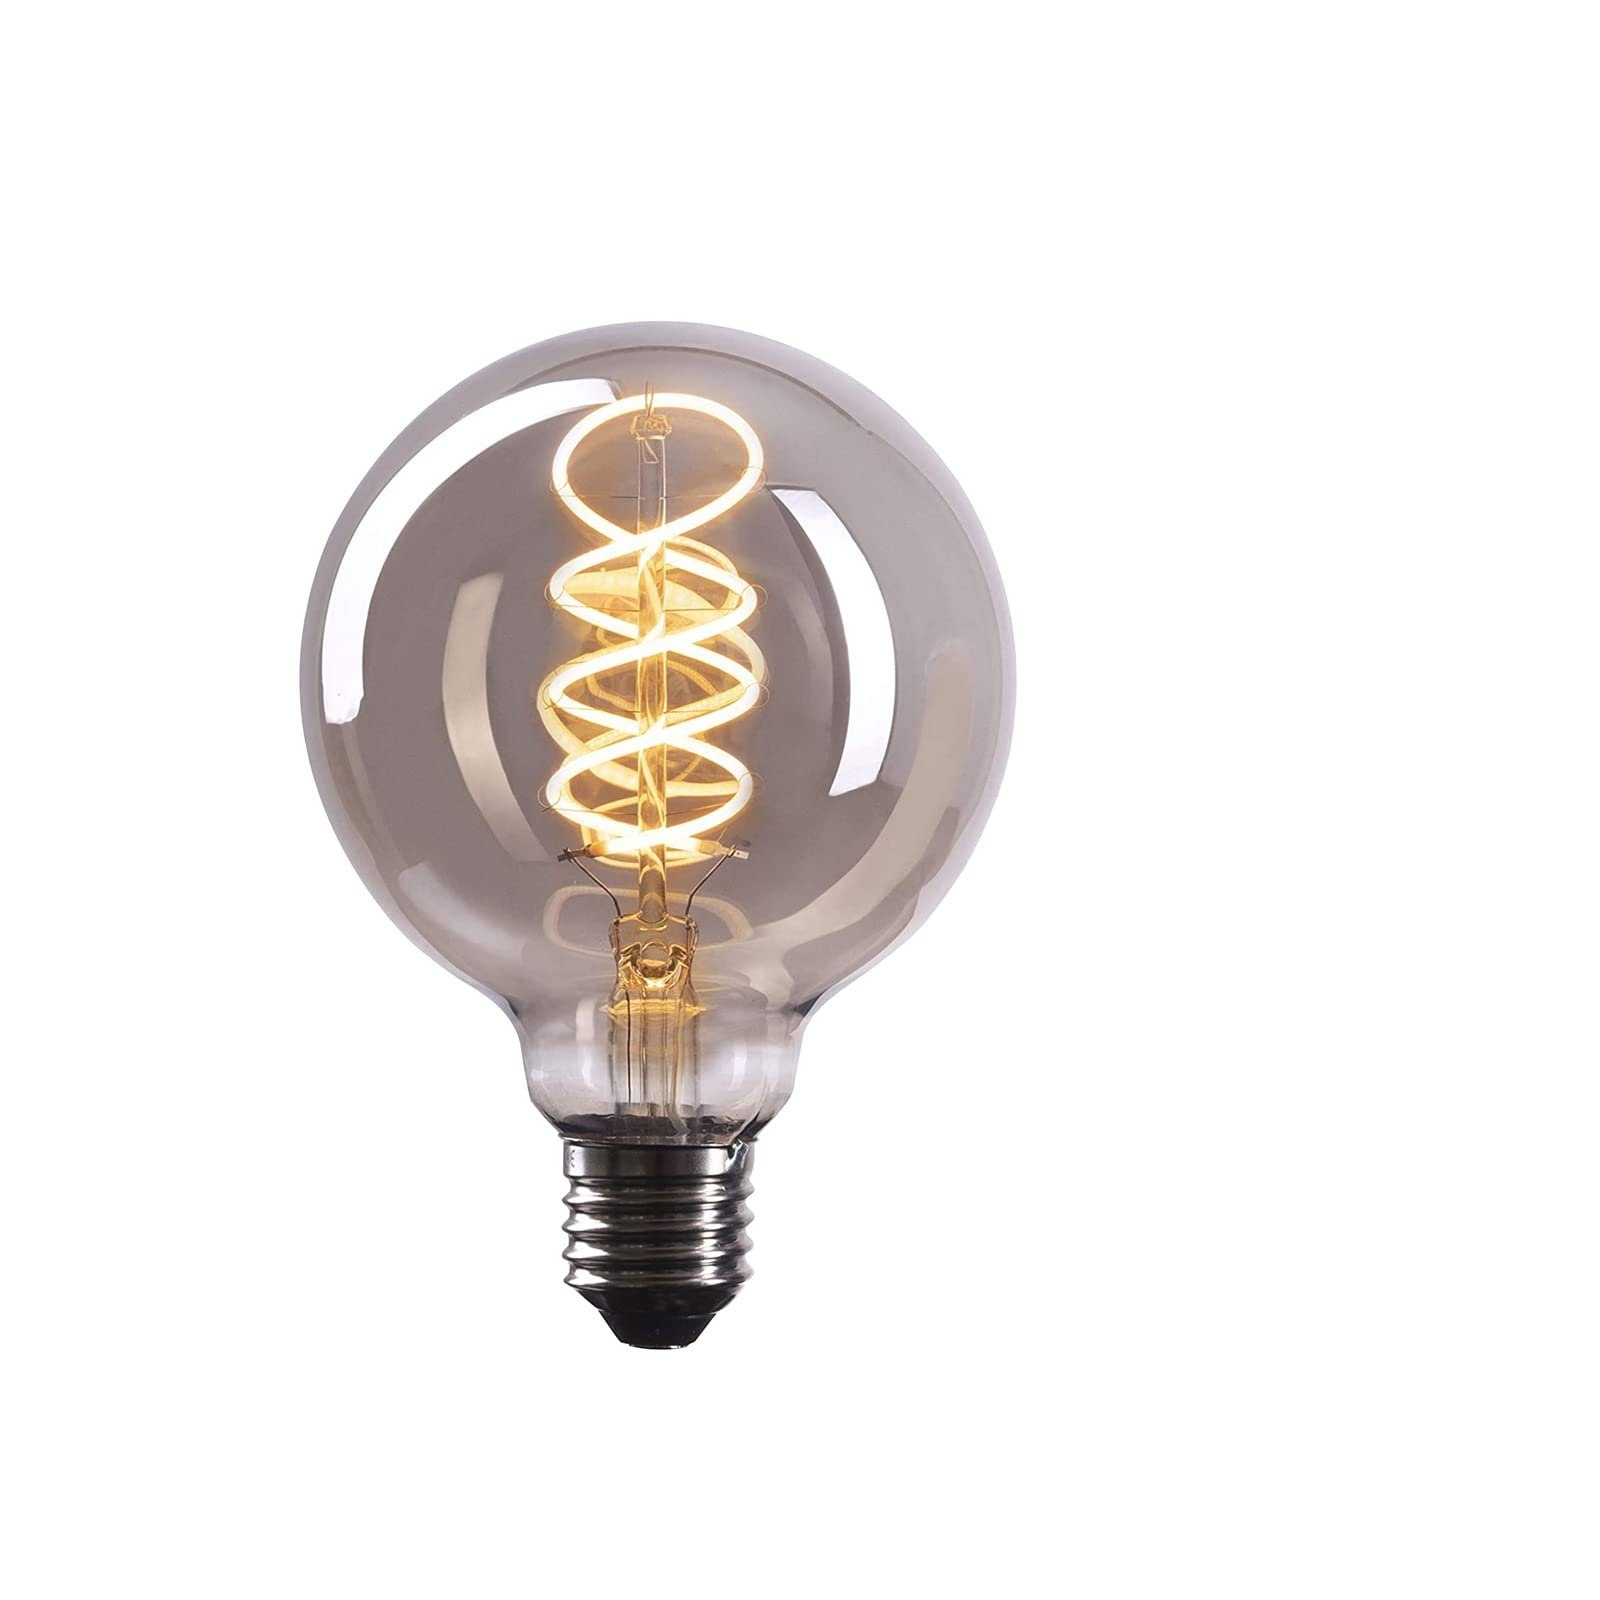 Crown LED LED Vintage Glühbirne E27 Fassung, Dimmbar, 5W, 1800K, Warmweiß,  230V Halogenlampe, Warmwei 1 Stck